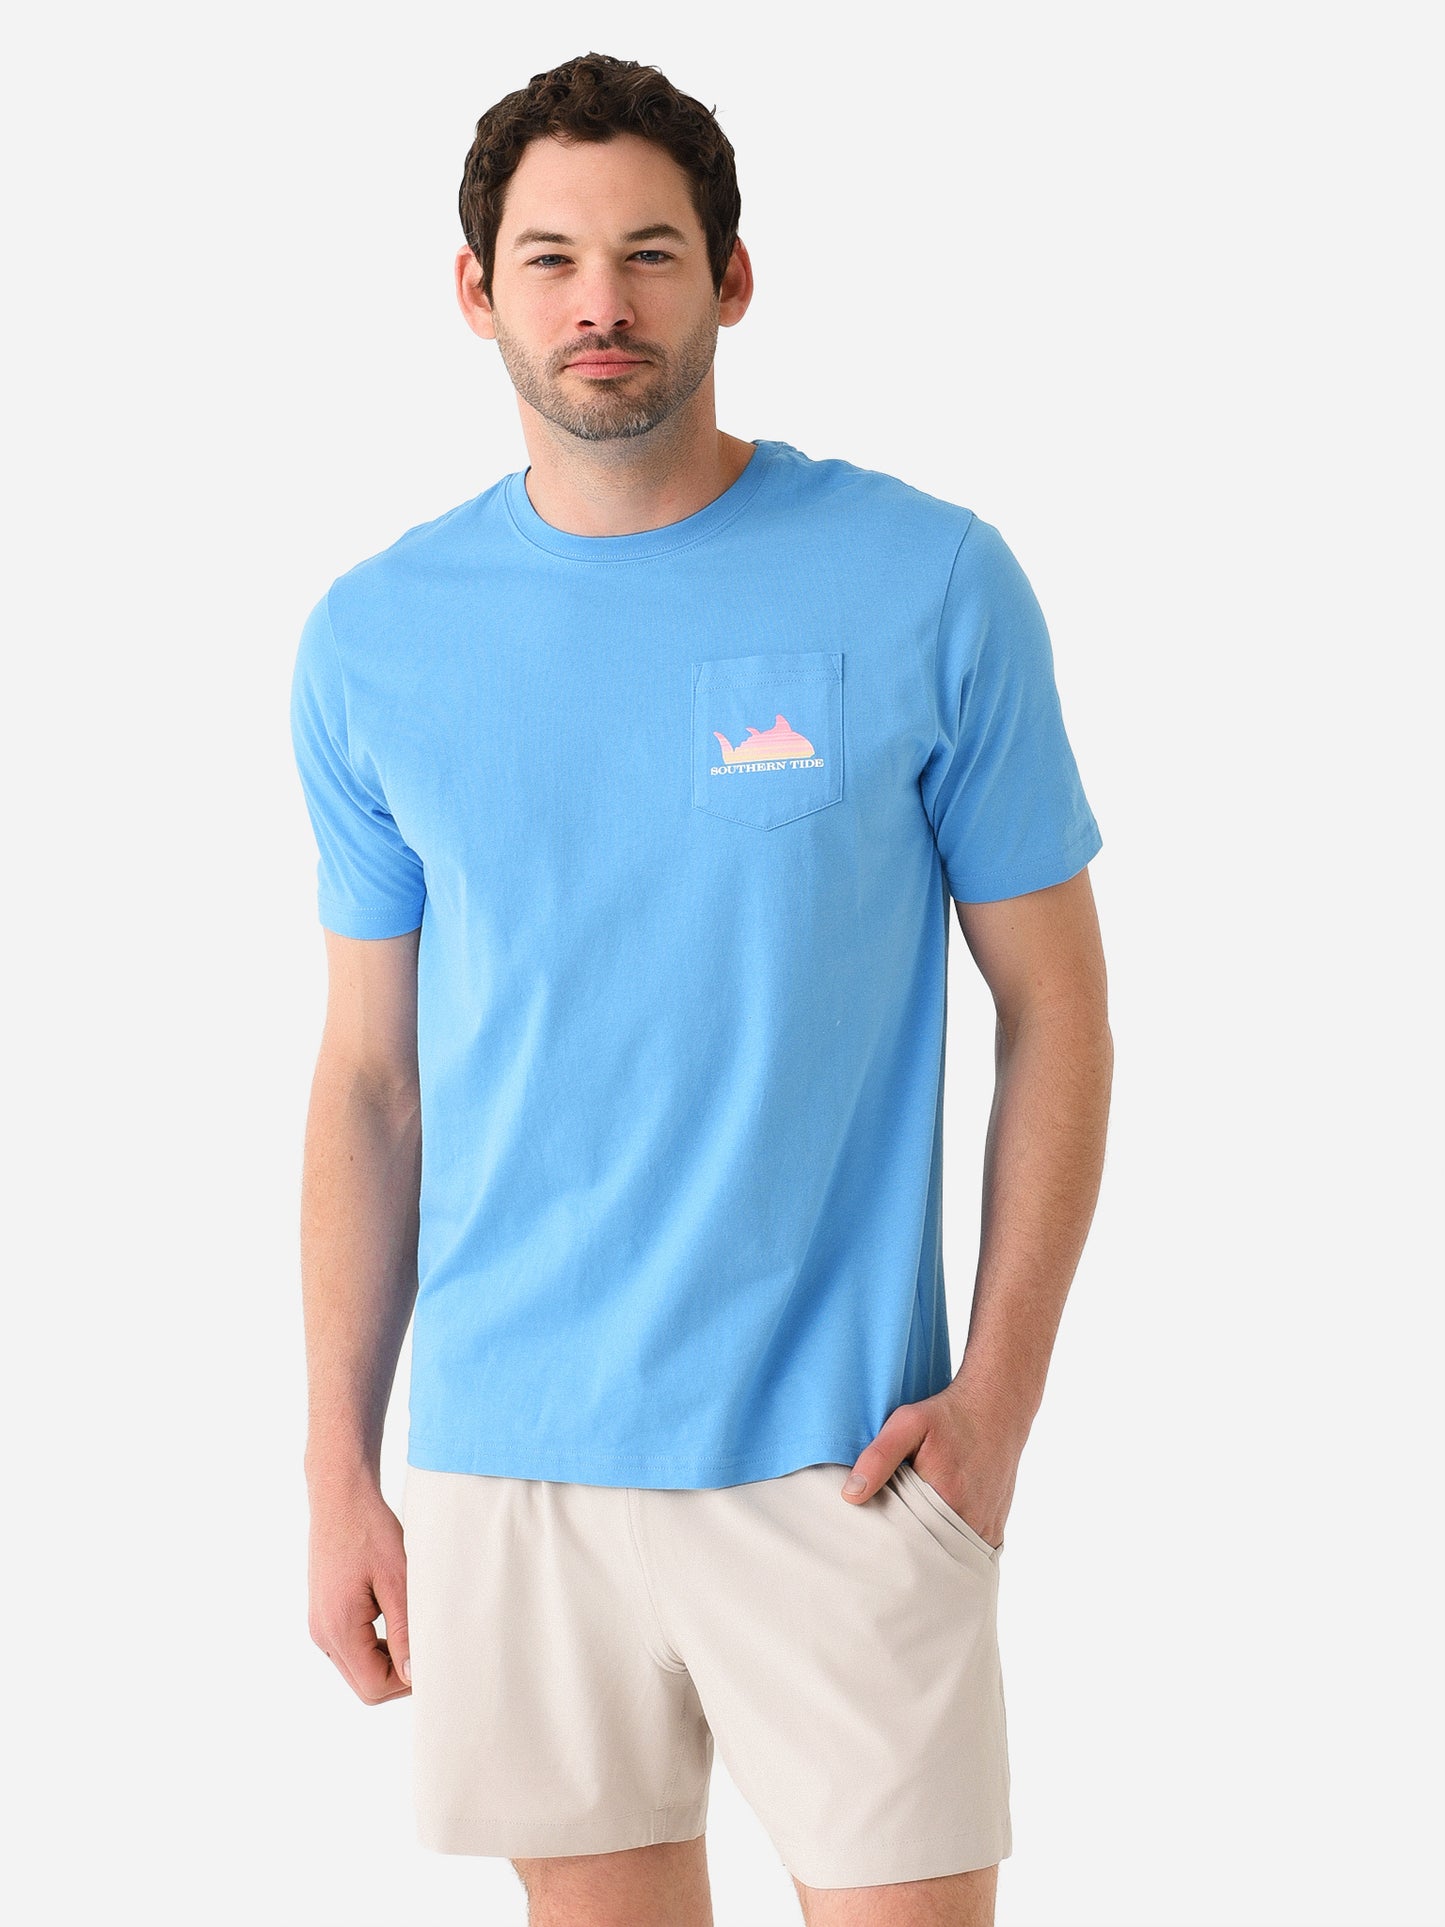 Southern Tide Men's Sunset Sailor T-Shirt